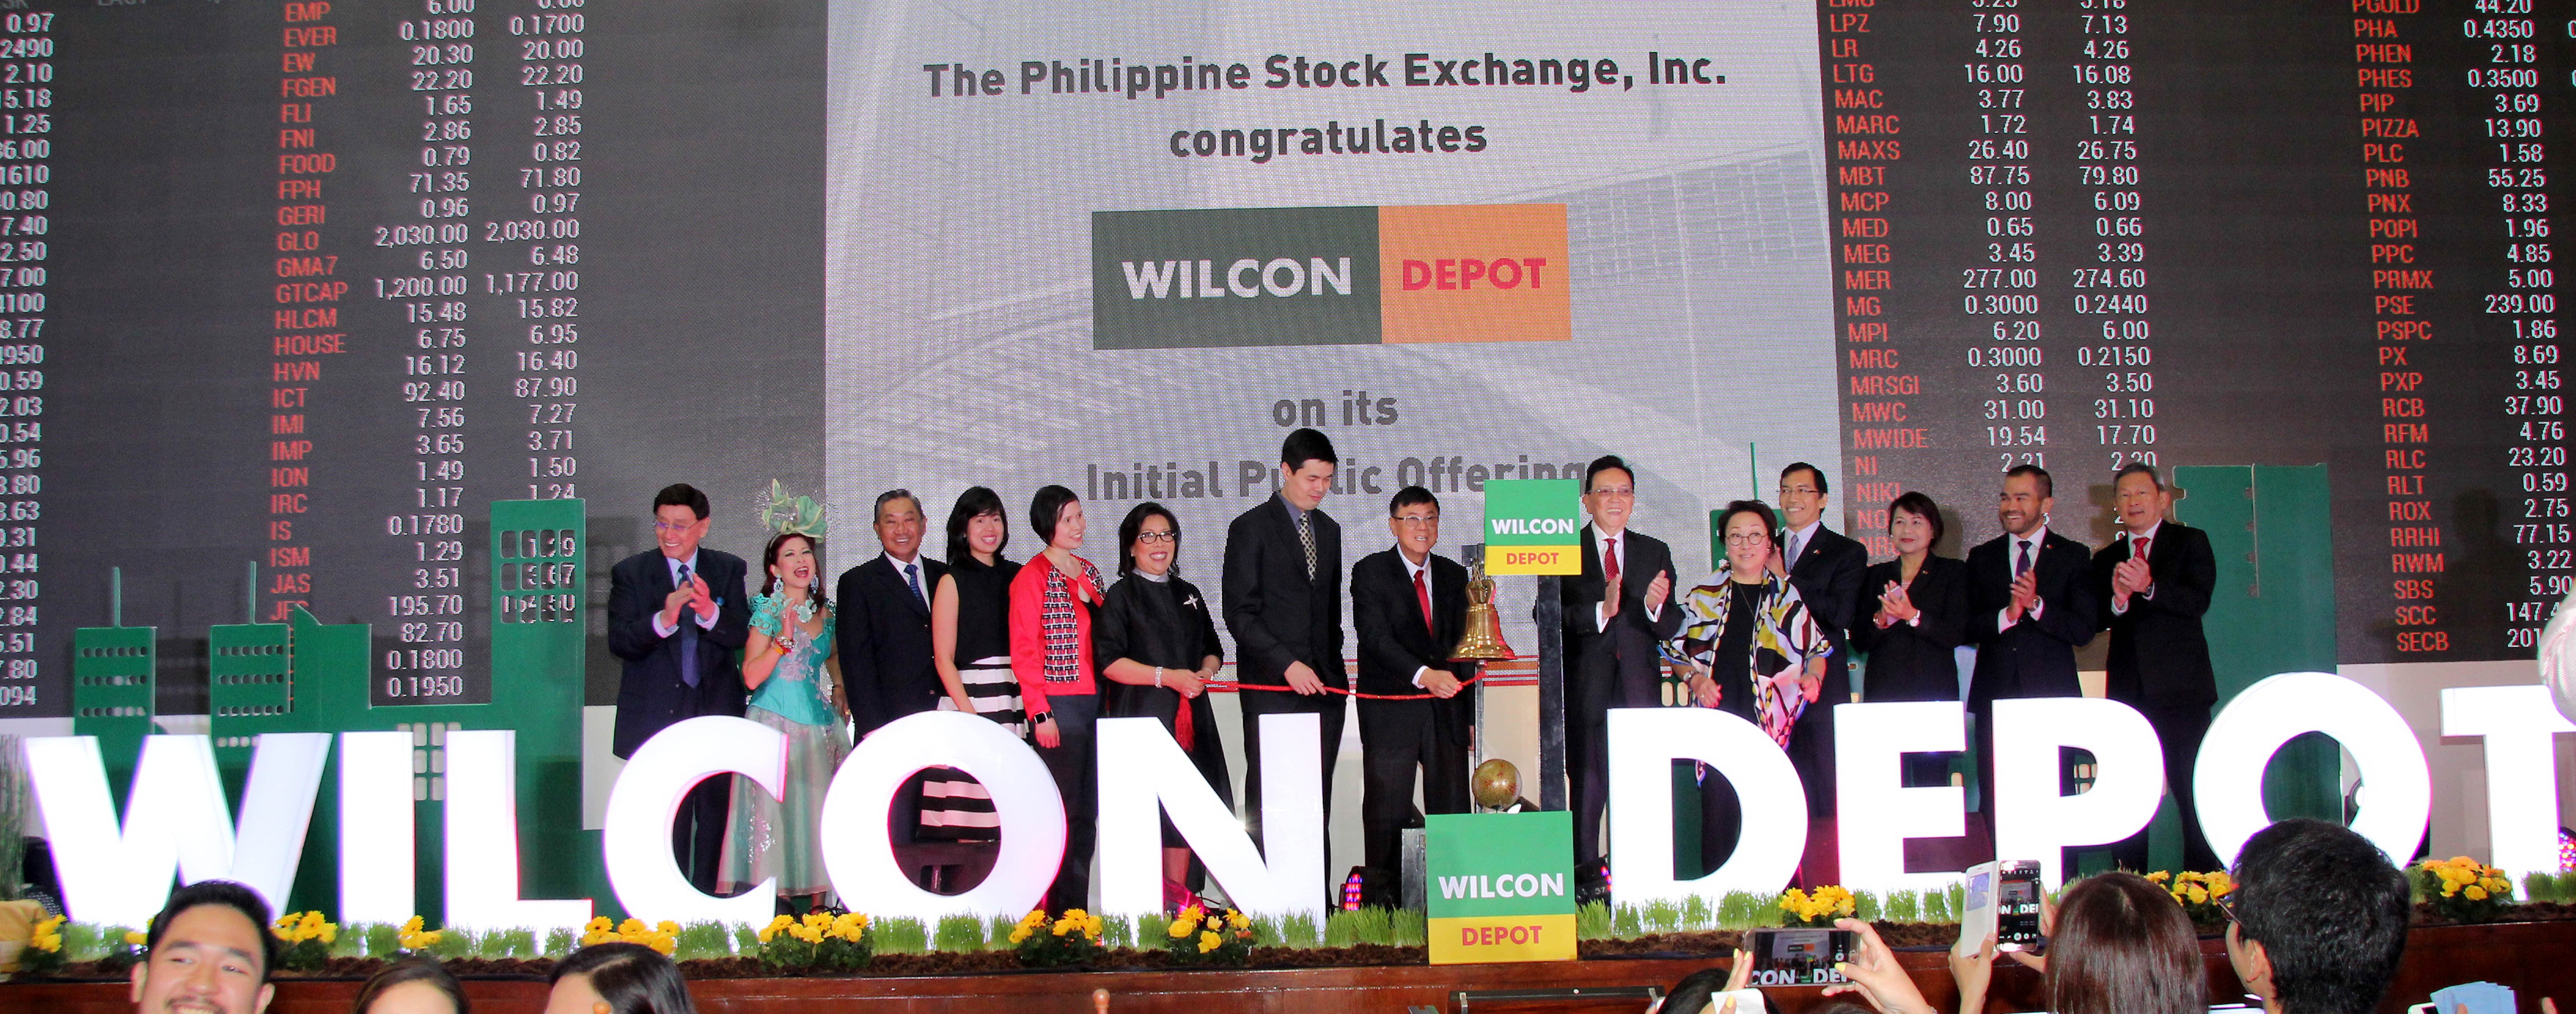 Wilcon Depot's IPO at Philippine Stock Exchange